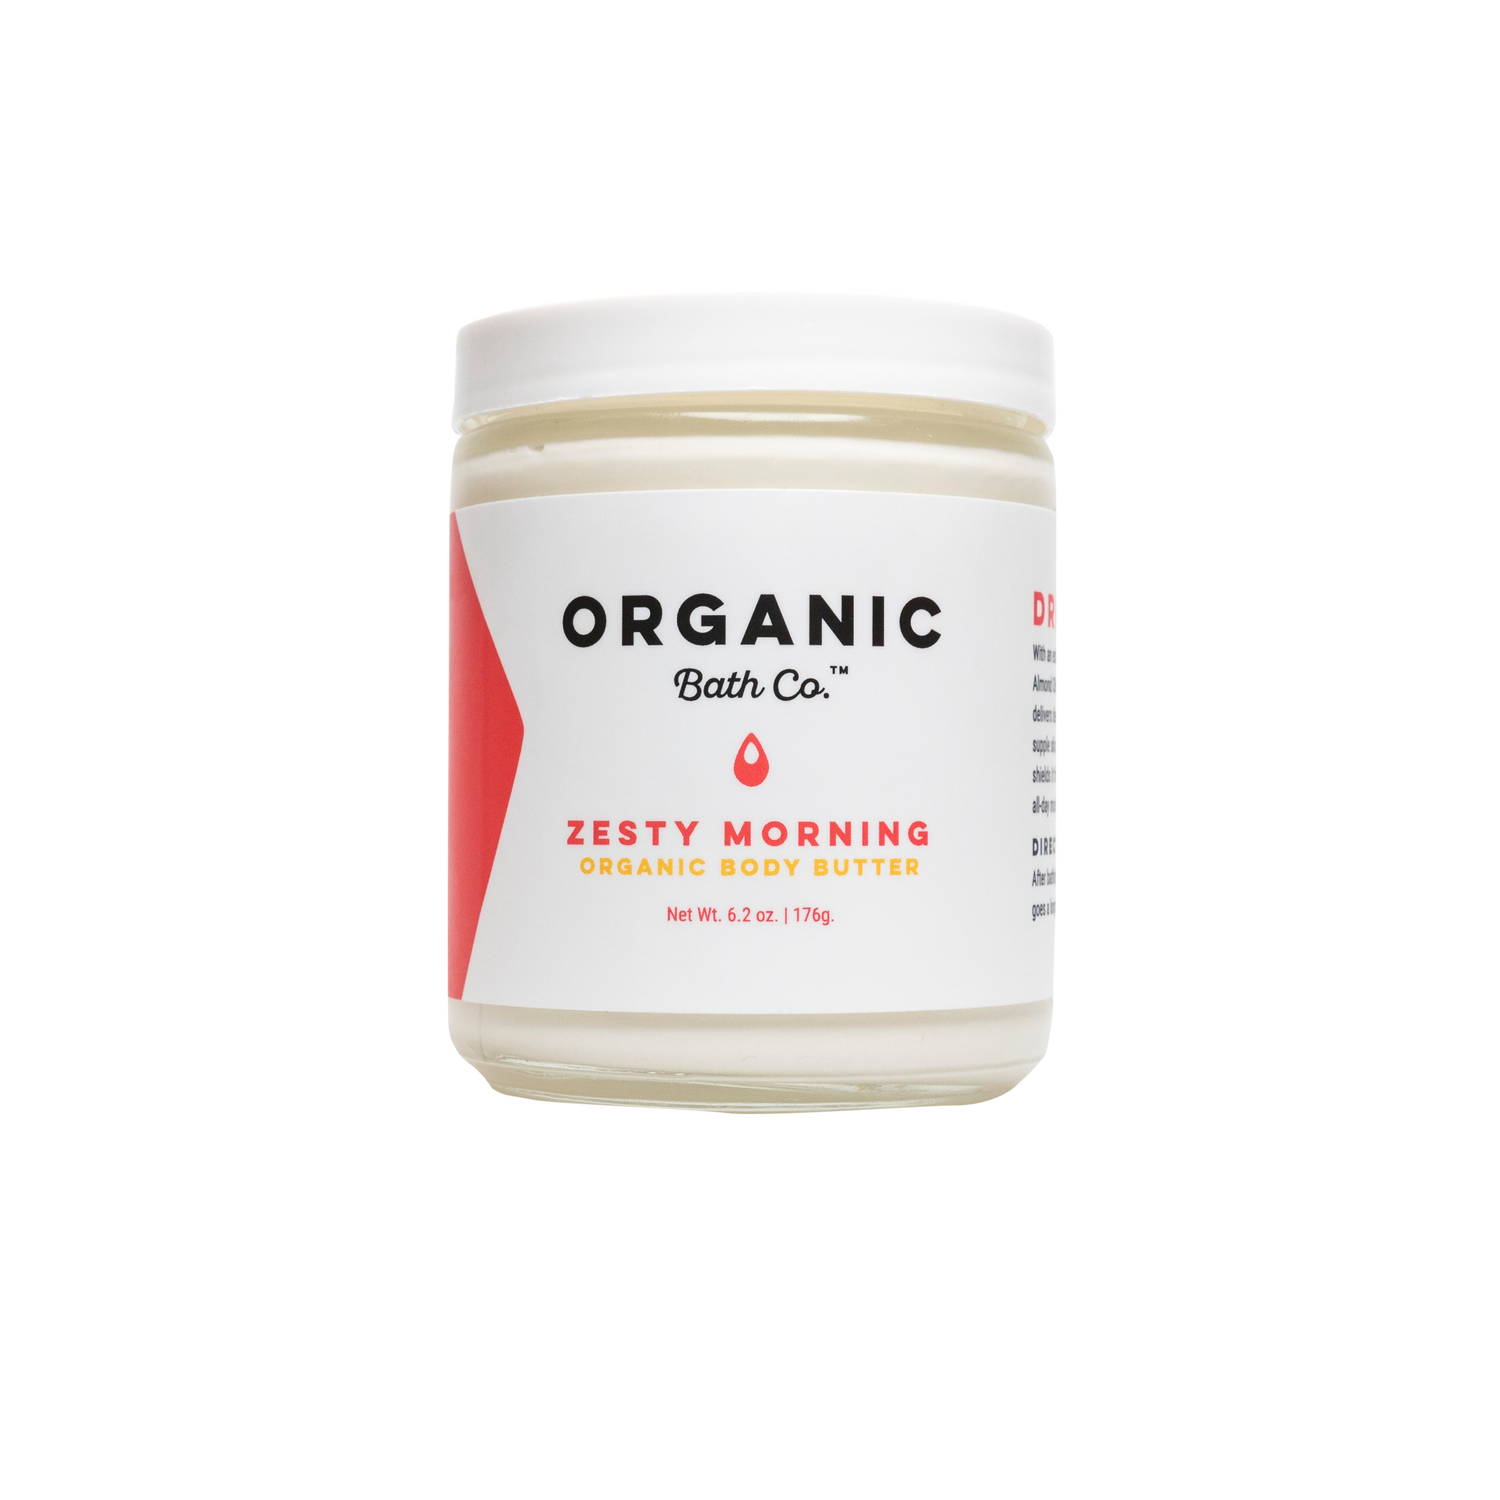 Organic Bath Co Zesty Morning Organic Body Butter - NEW PACKAGING - AILLEA